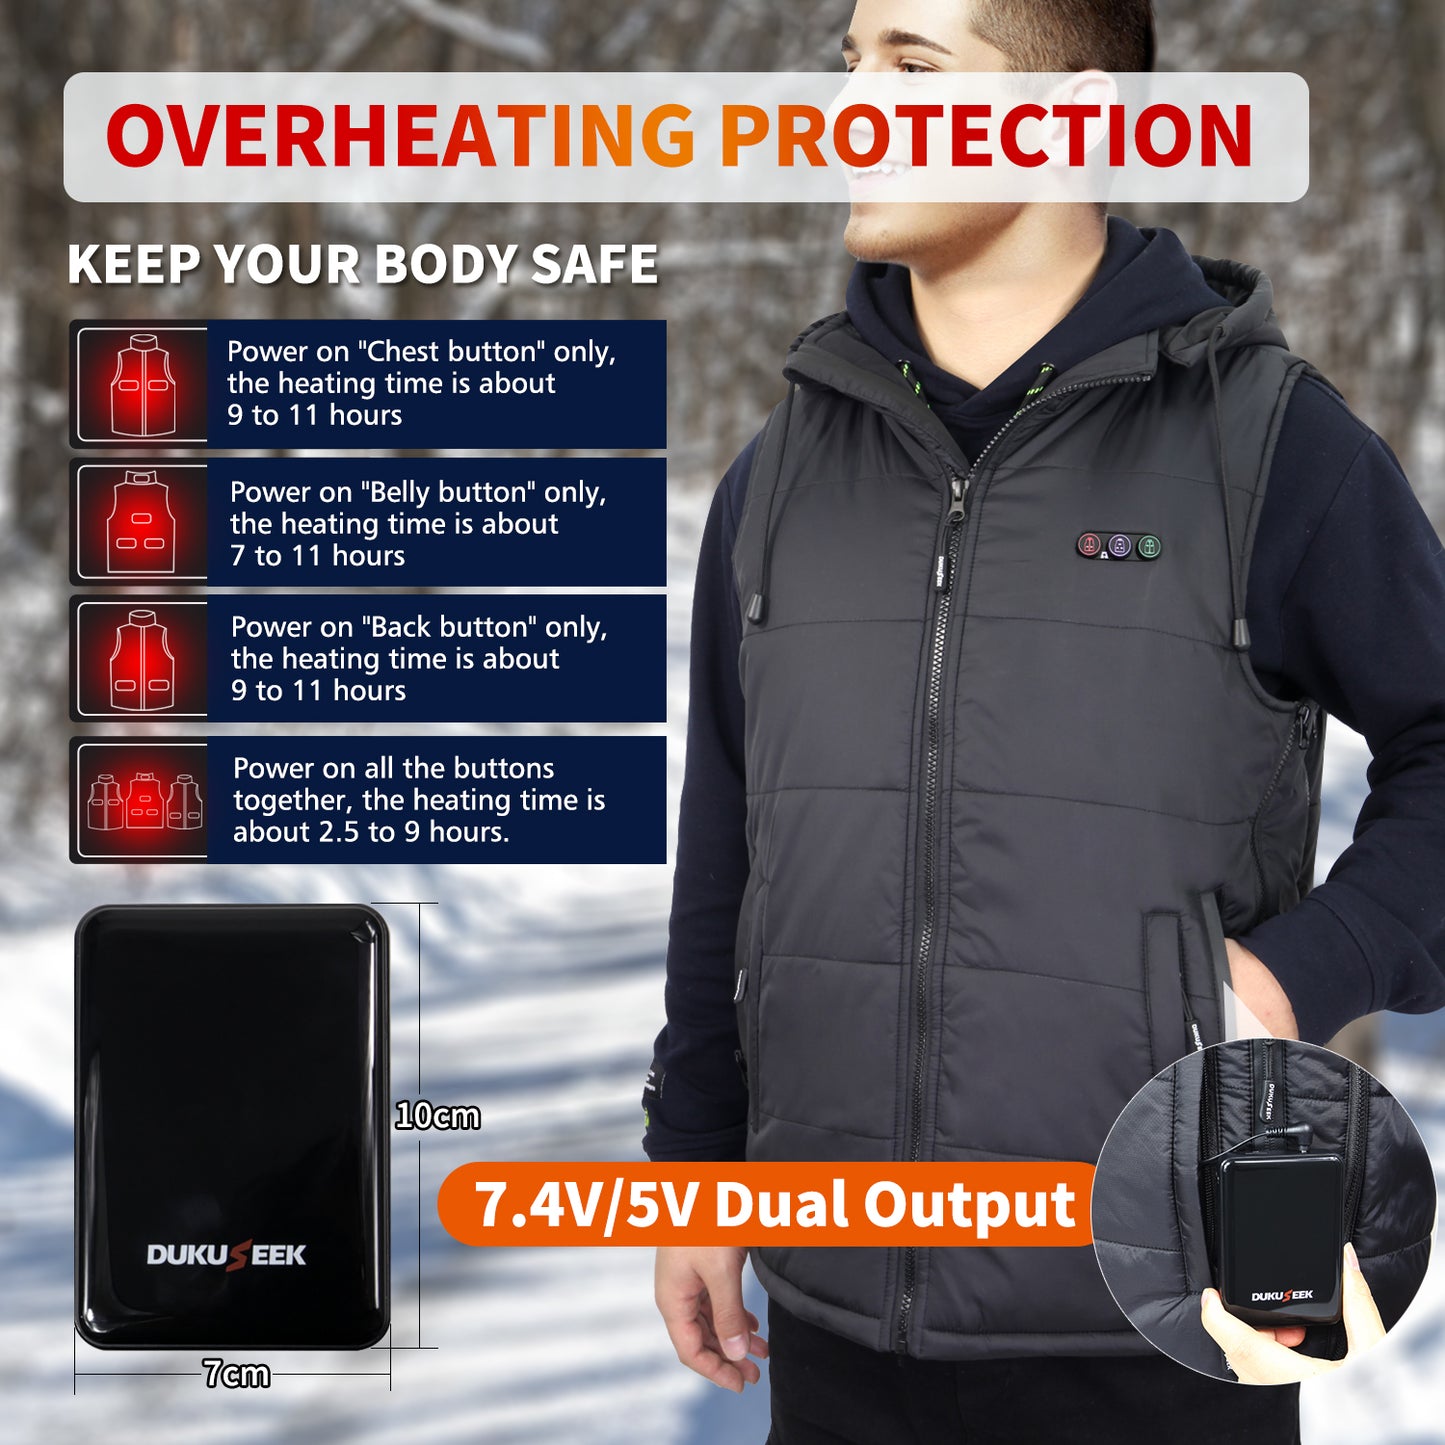 DUKUSEEK Heated Vest rechargeable battery